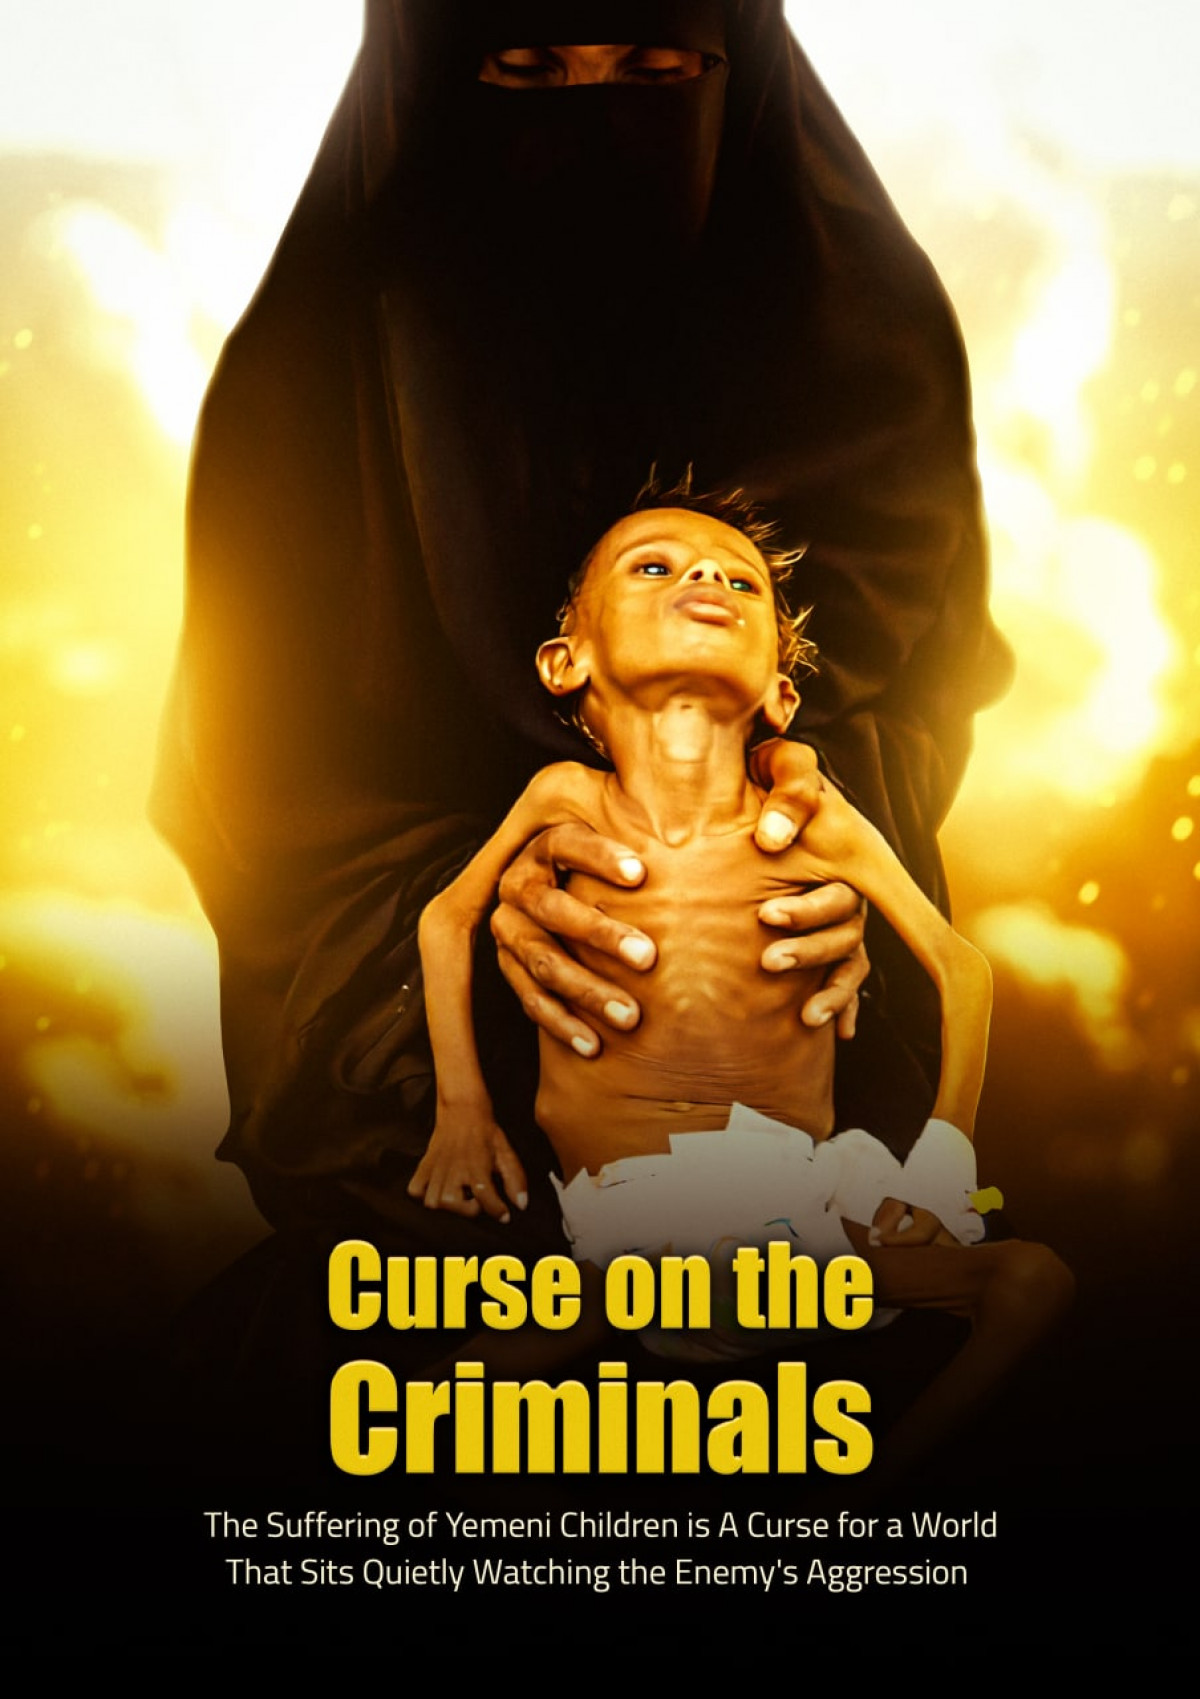 Curse on the criminals